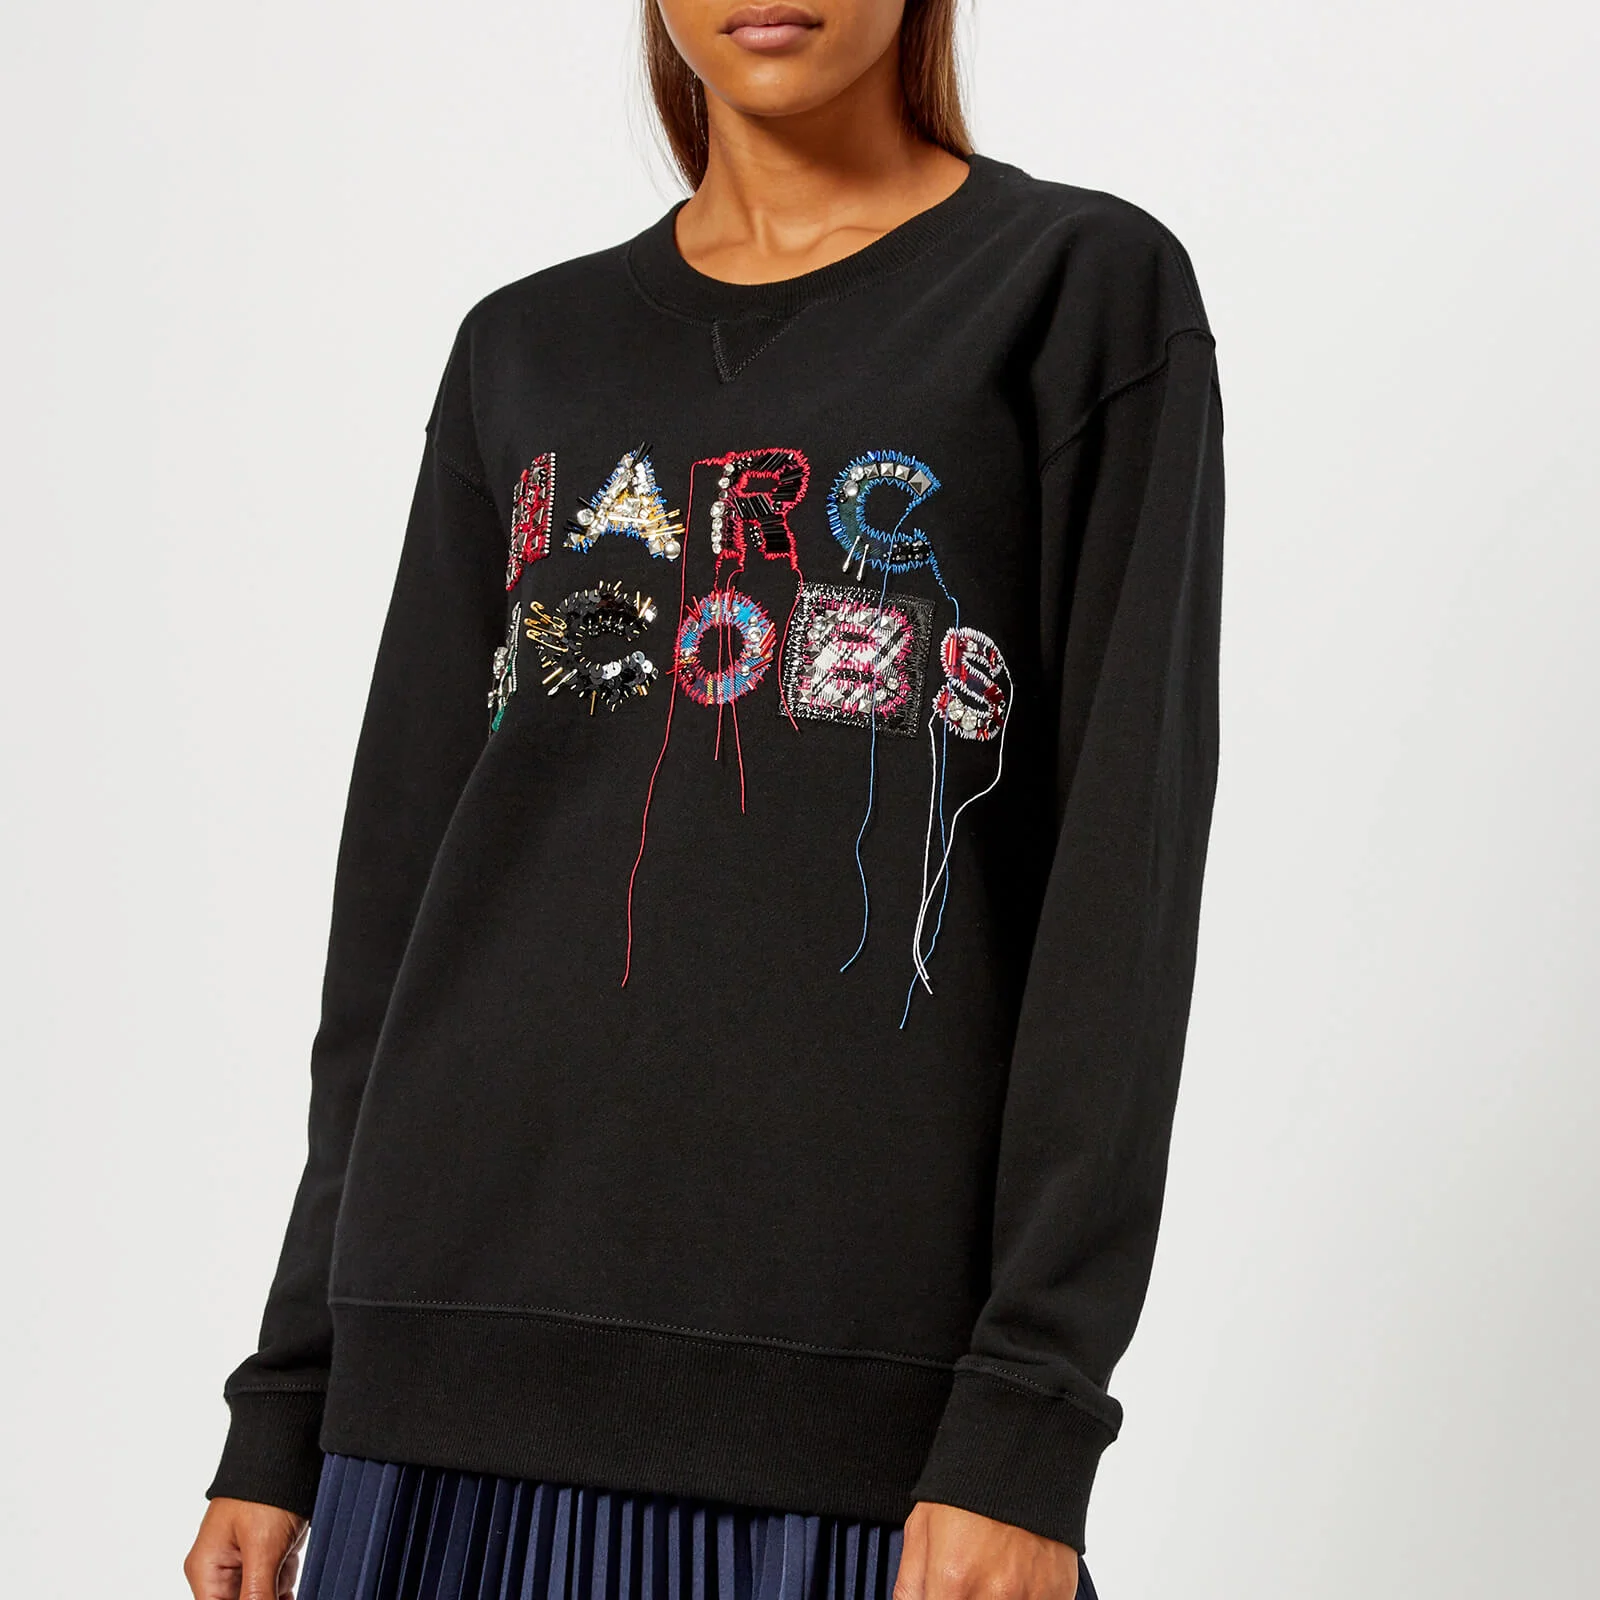 Marc Jacobs Women's Lux Embellished Sweatshirt - Black Image 1